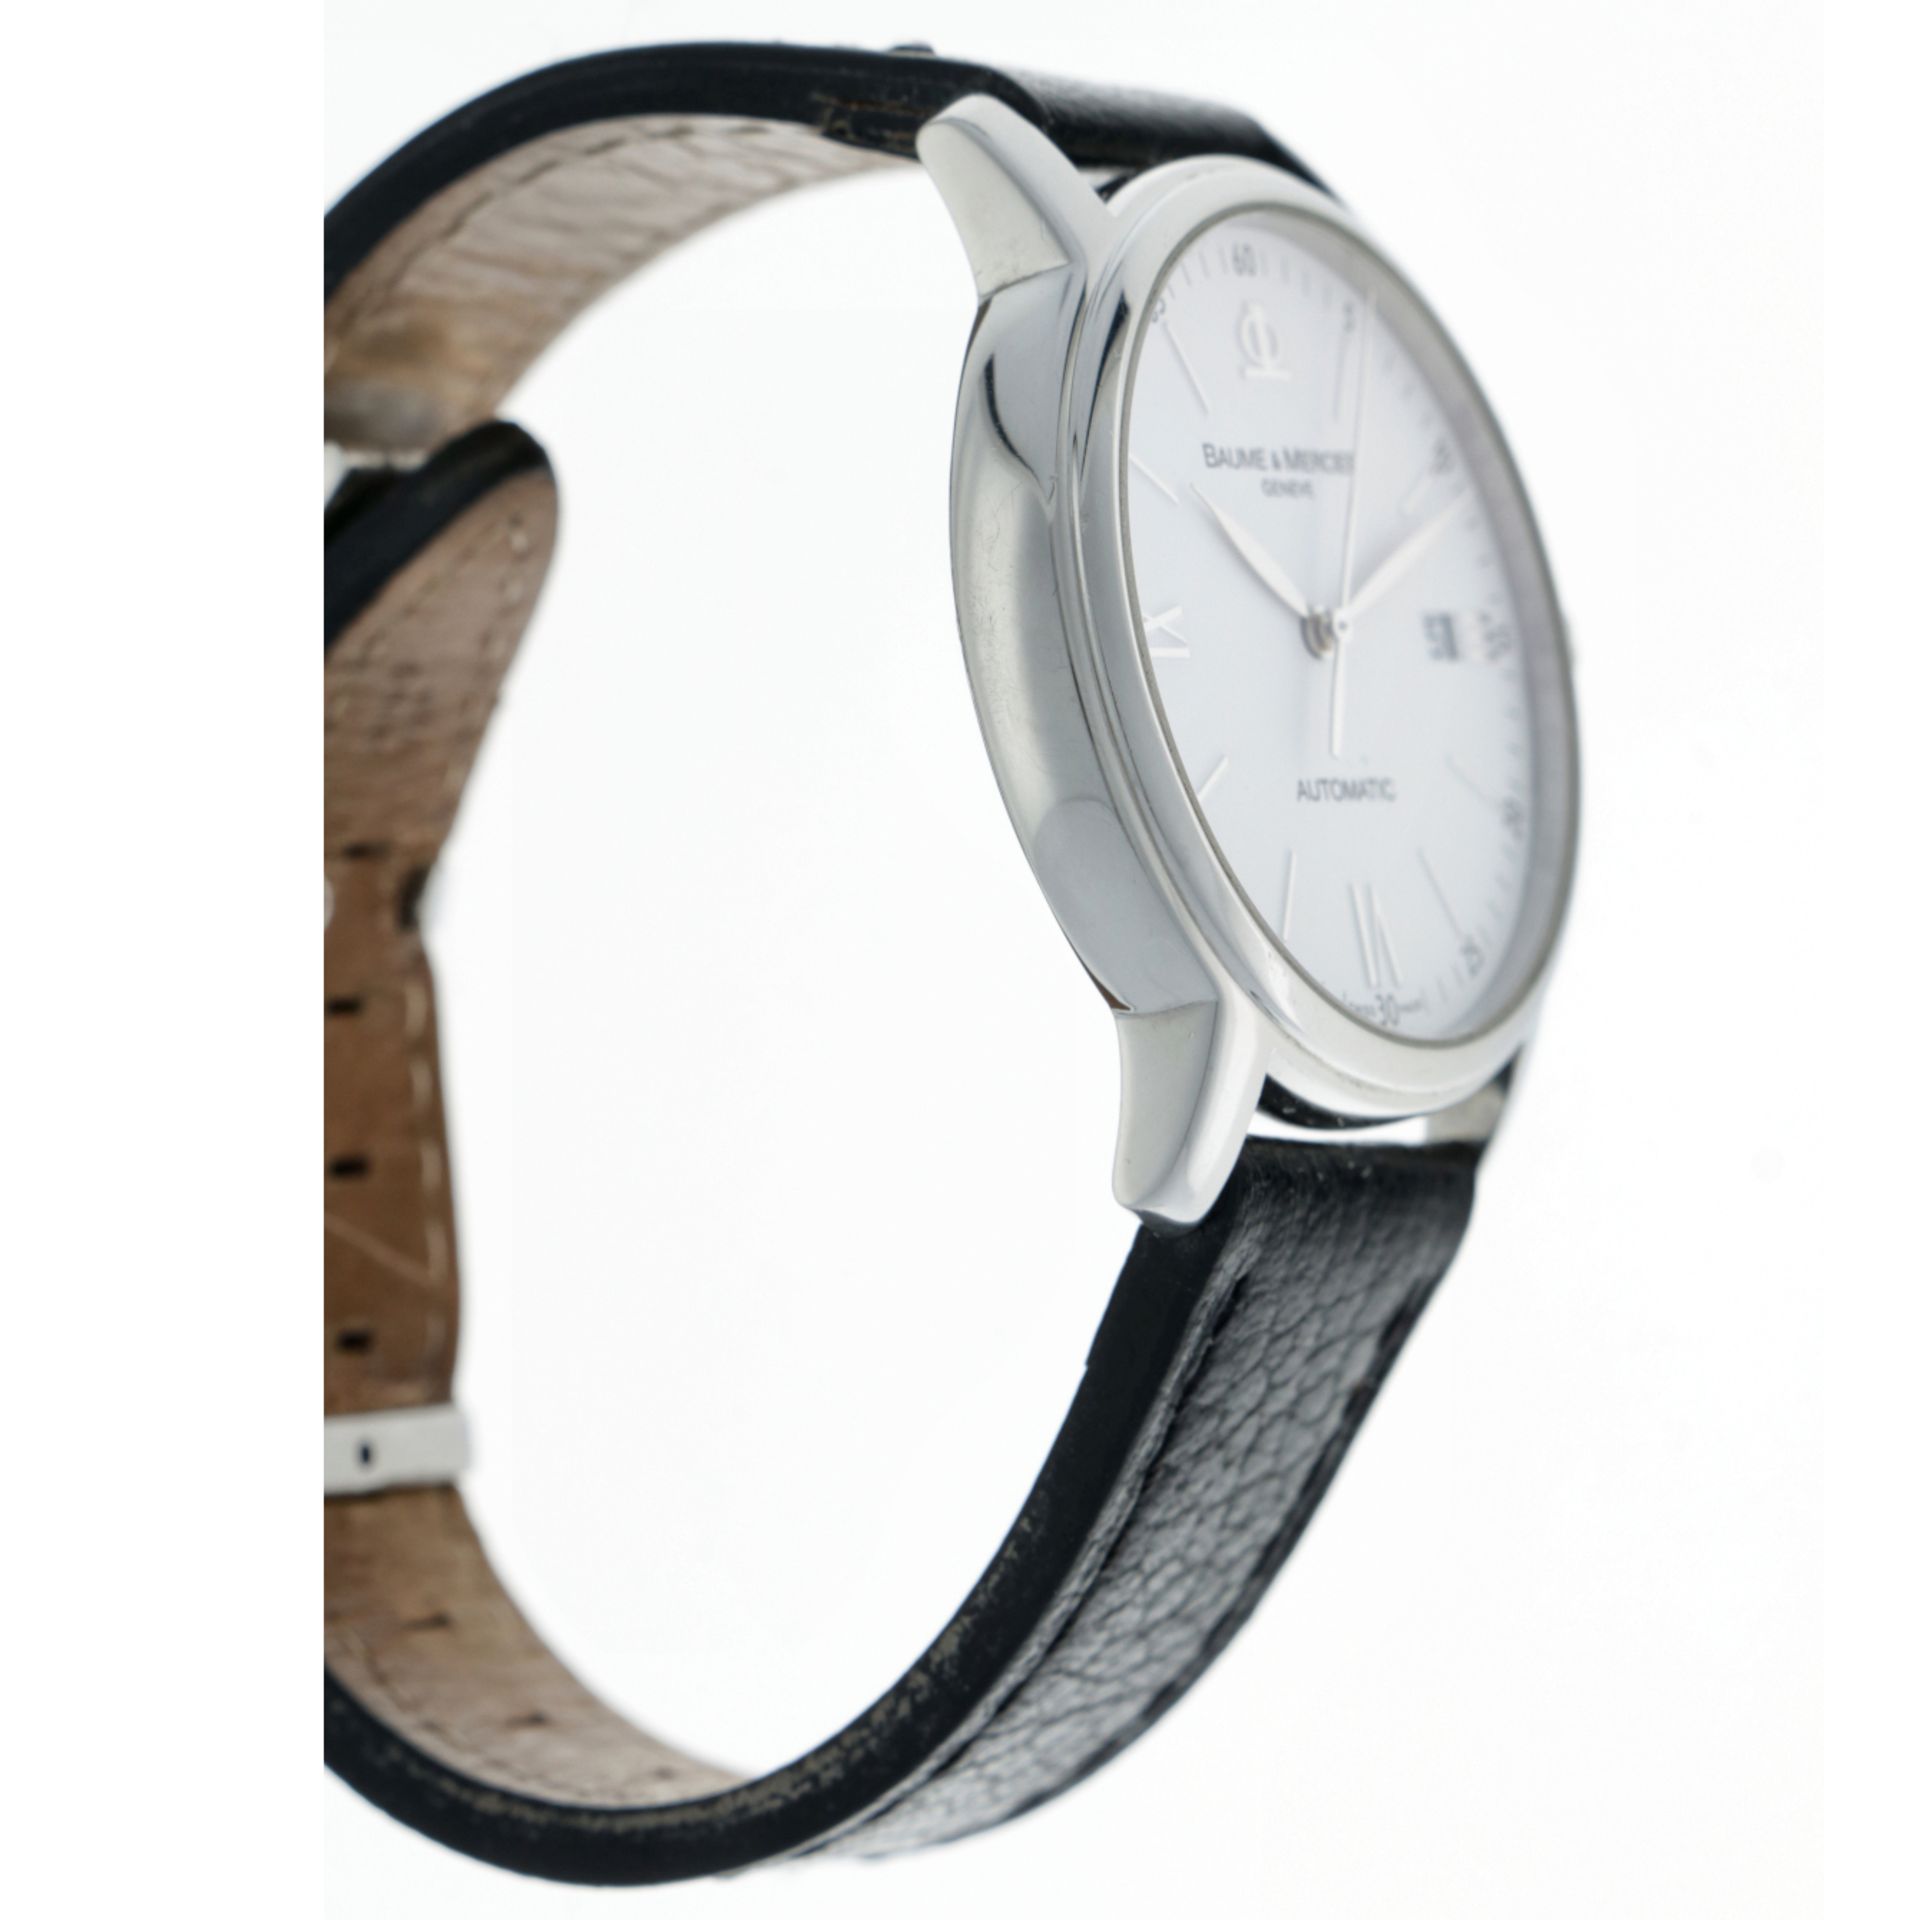 No Reserve - Baume & Mercier Classima 65554 - Men's watch - approx. 2010. - Image 4 of 5